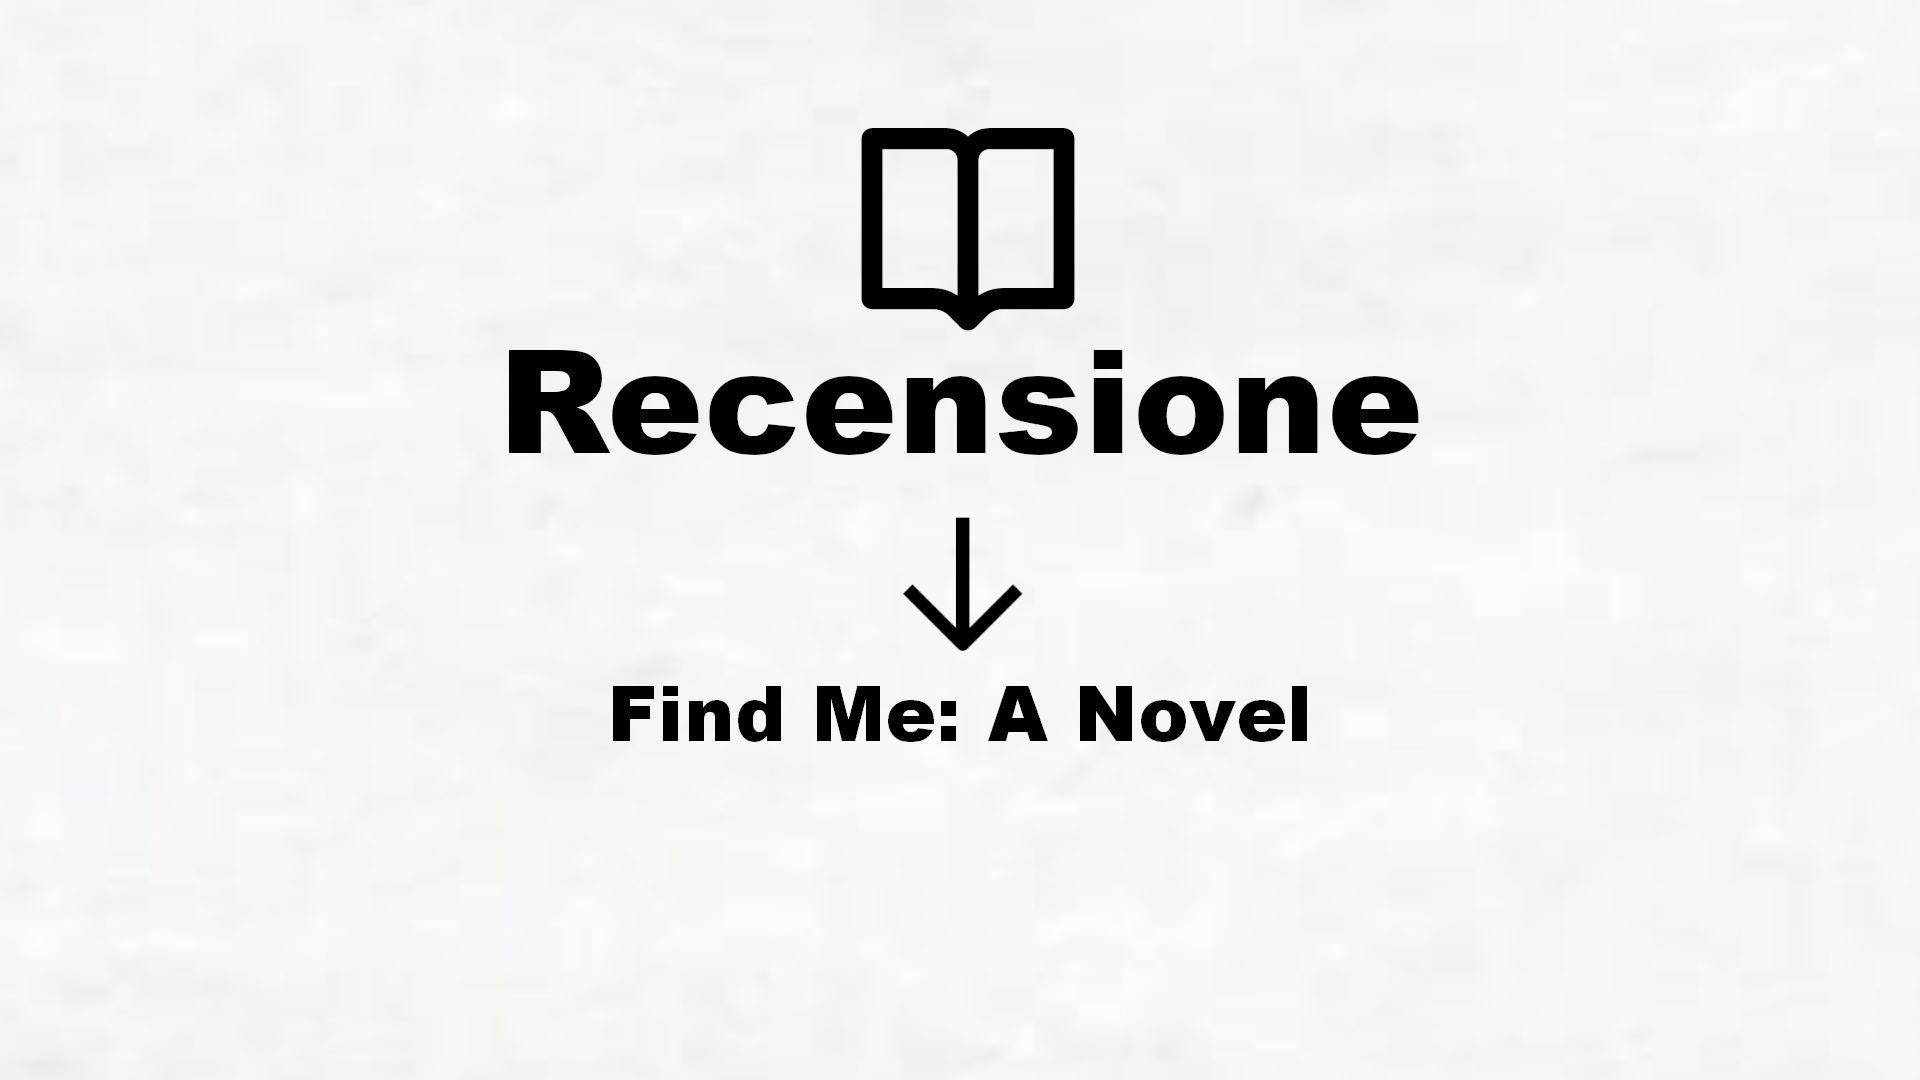 Find Me: A Novel – Recensione Libro